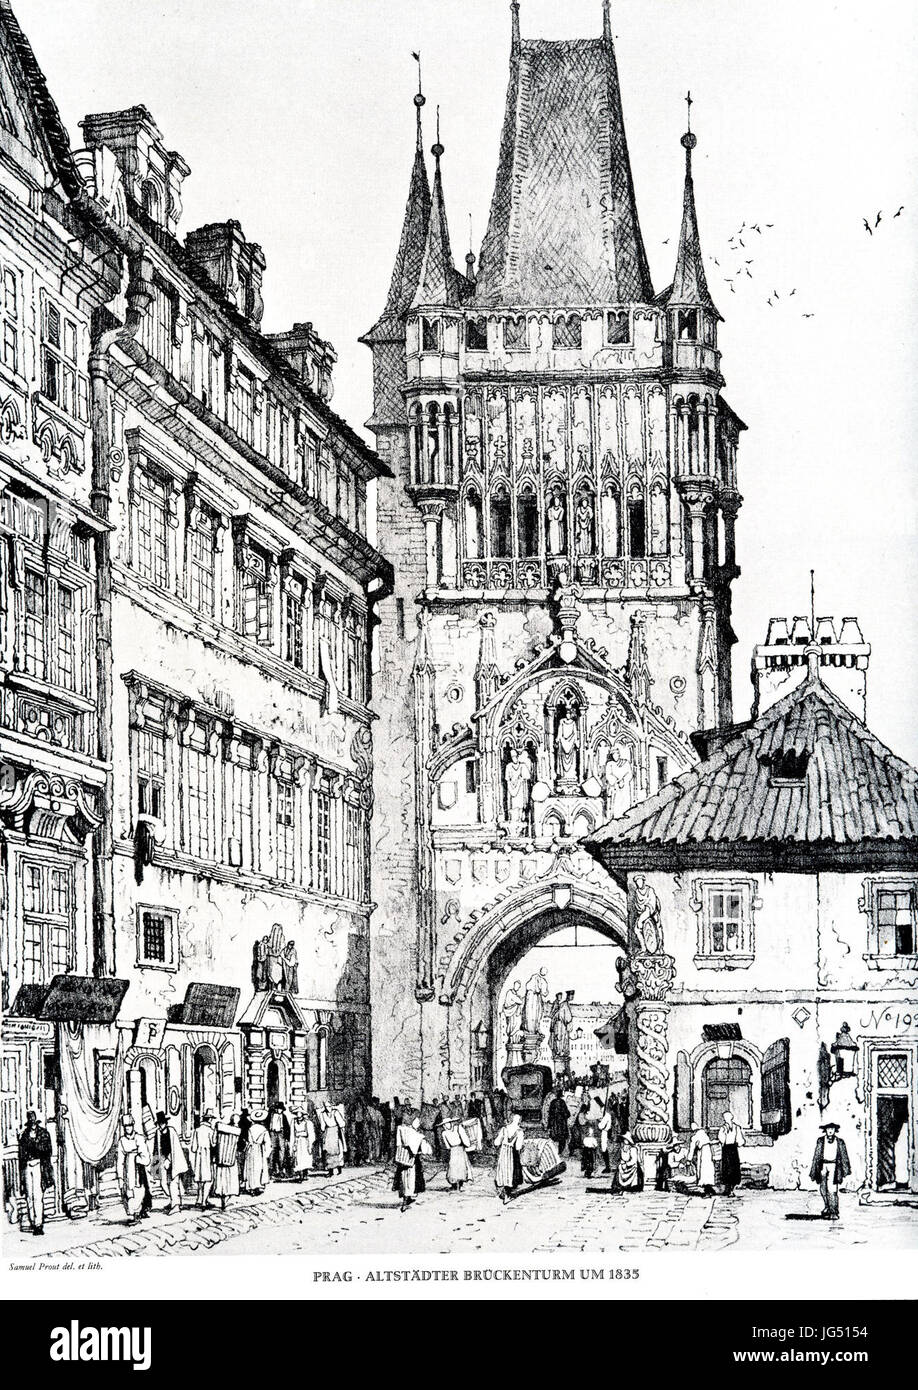 Prag Altstädter Brückenturm 1835 Stock Photo